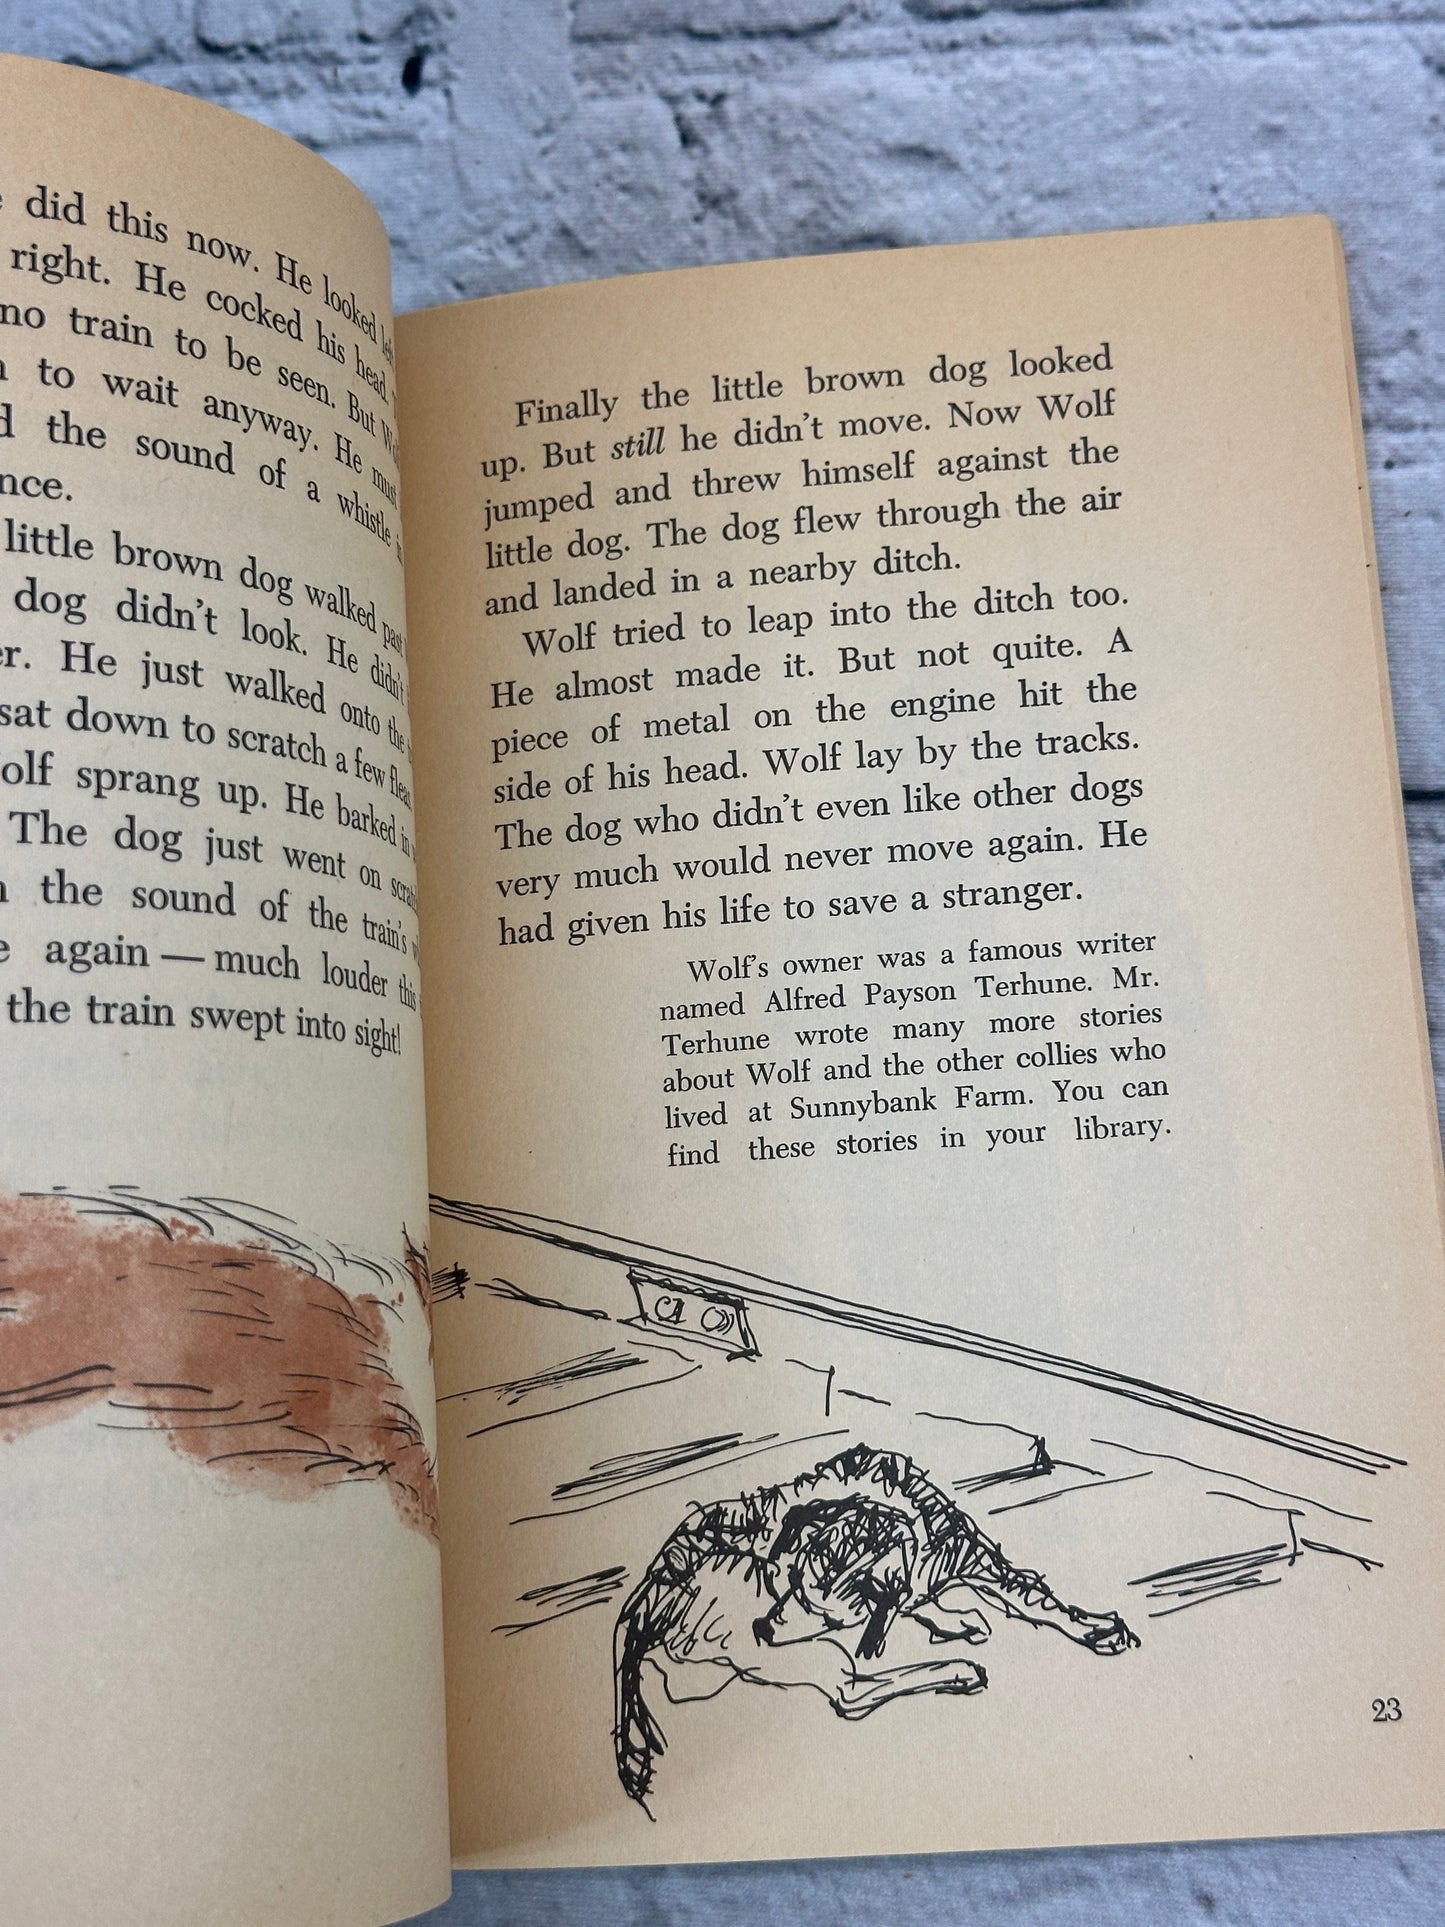 Five True Dog Stories by Margaret Davidson [1977 · First Printing]